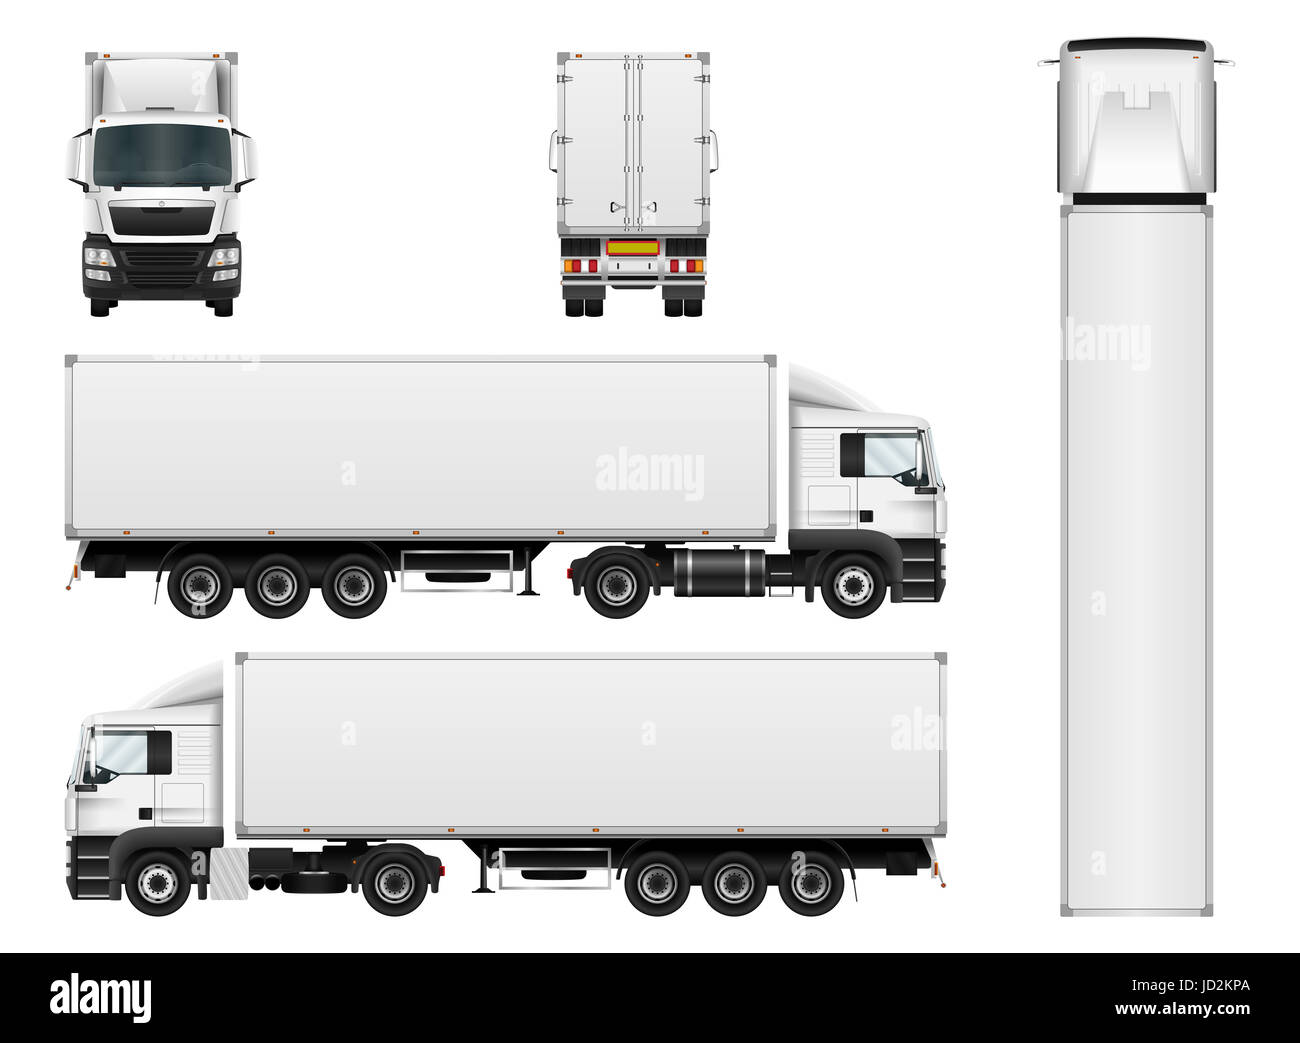 Isolated truck trailer illustration on white background. Cargo delivering vehicle. Stock Photo